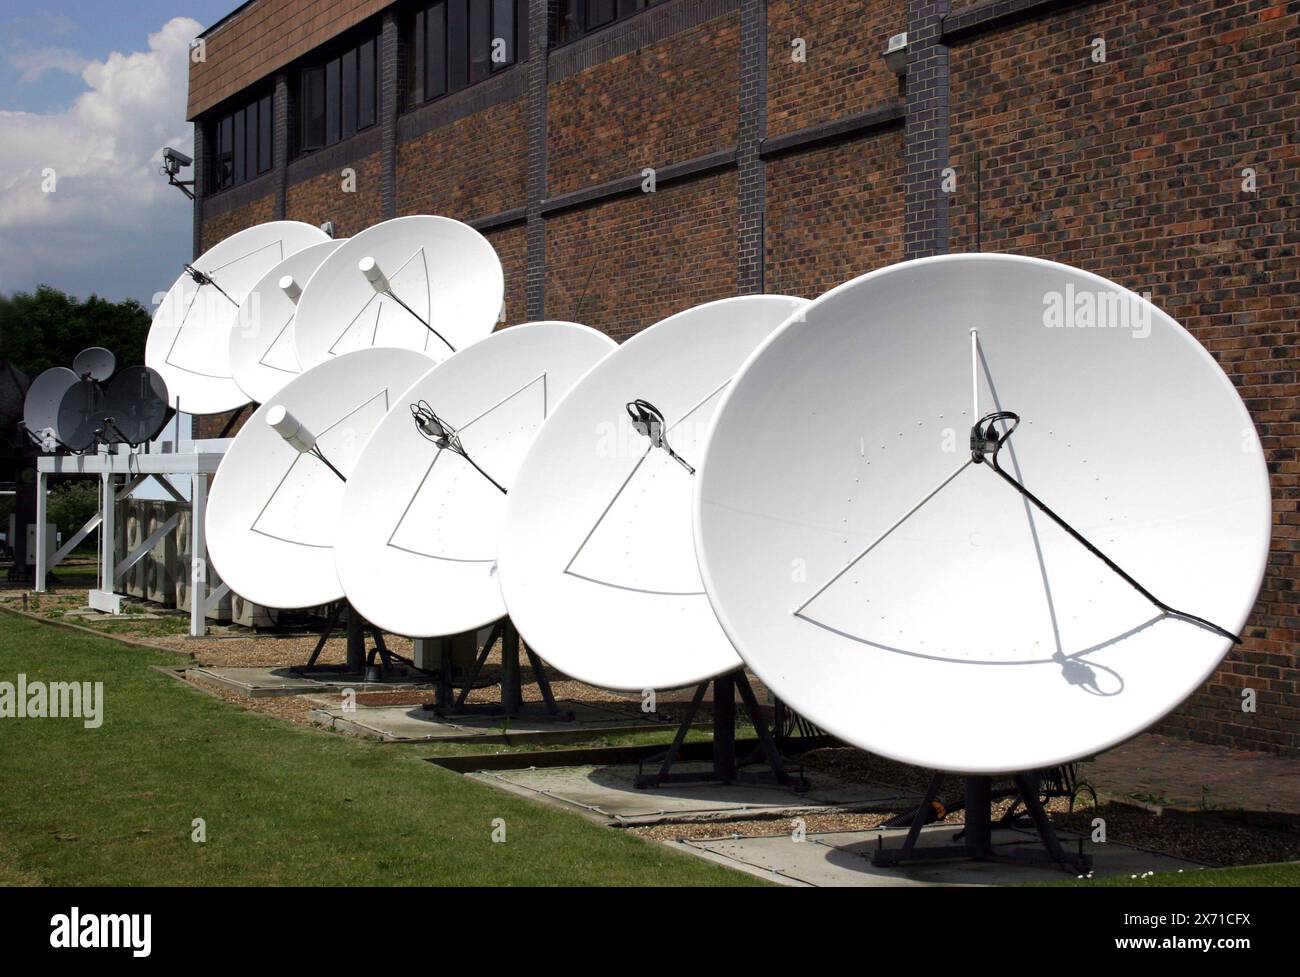 Kommunikationssatelliten außerhalb eines TV-Studios Stockfoto